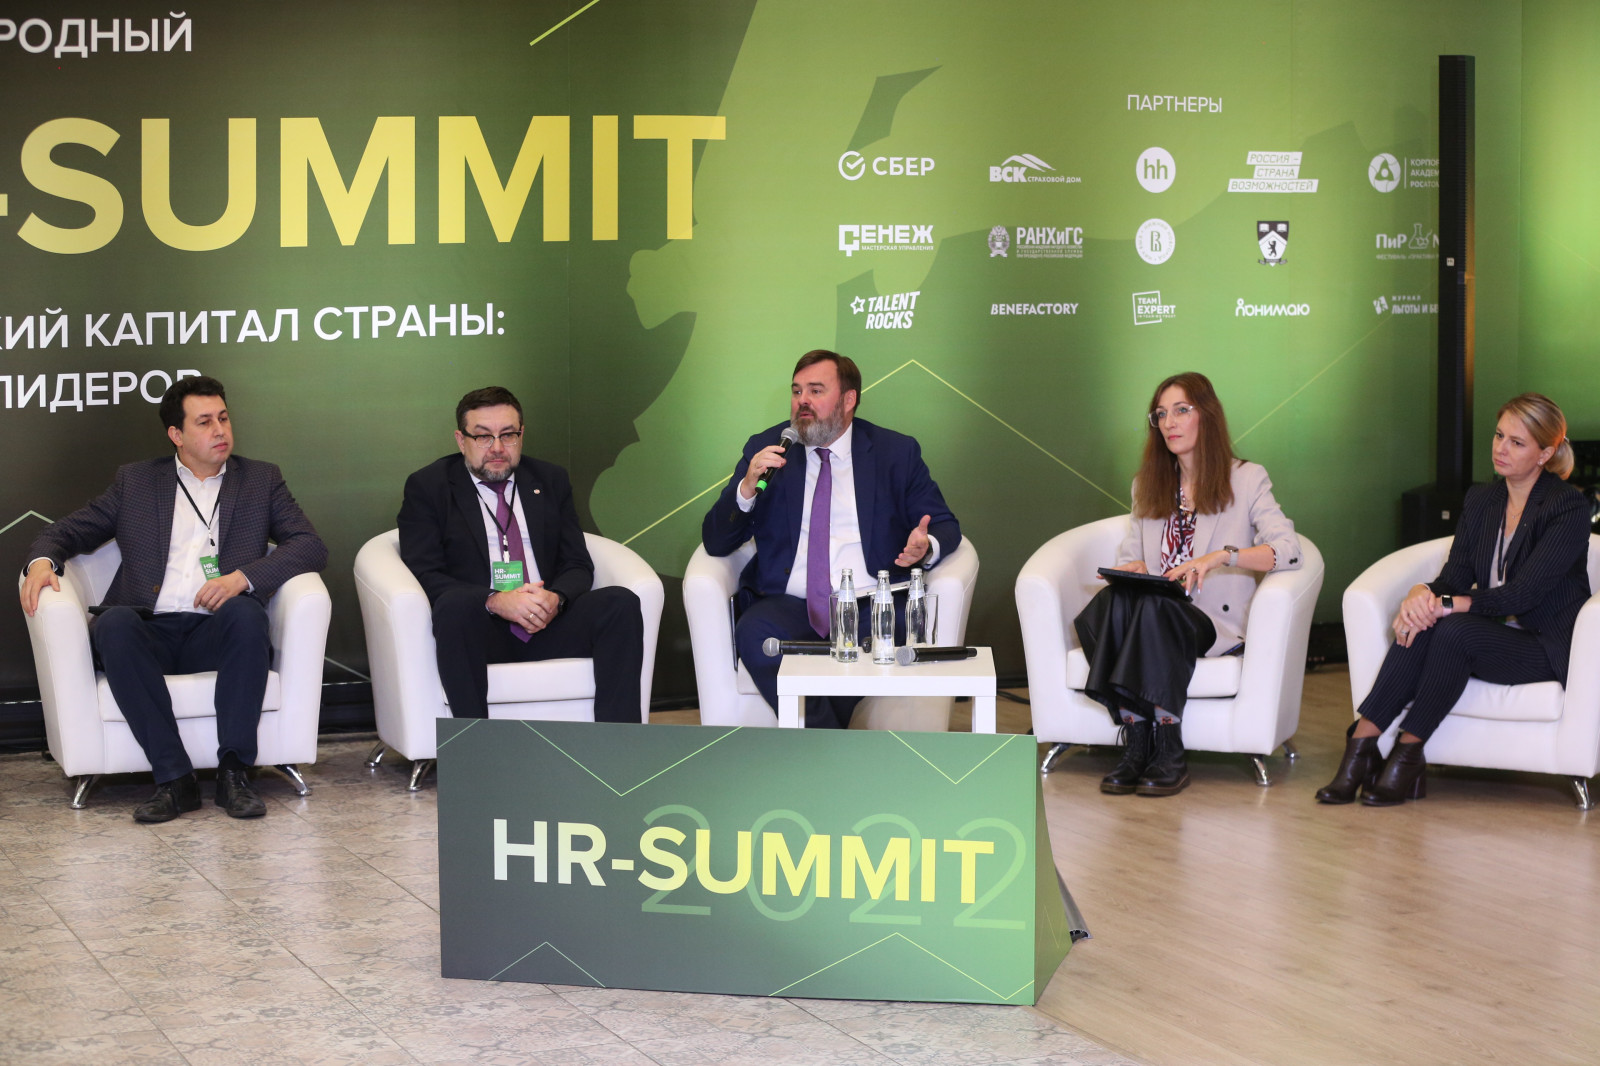 HR-саммит. Международный HR саммит Нижний Новгород. HR Summit купно. Выставка HR Summit. Саммит нижний